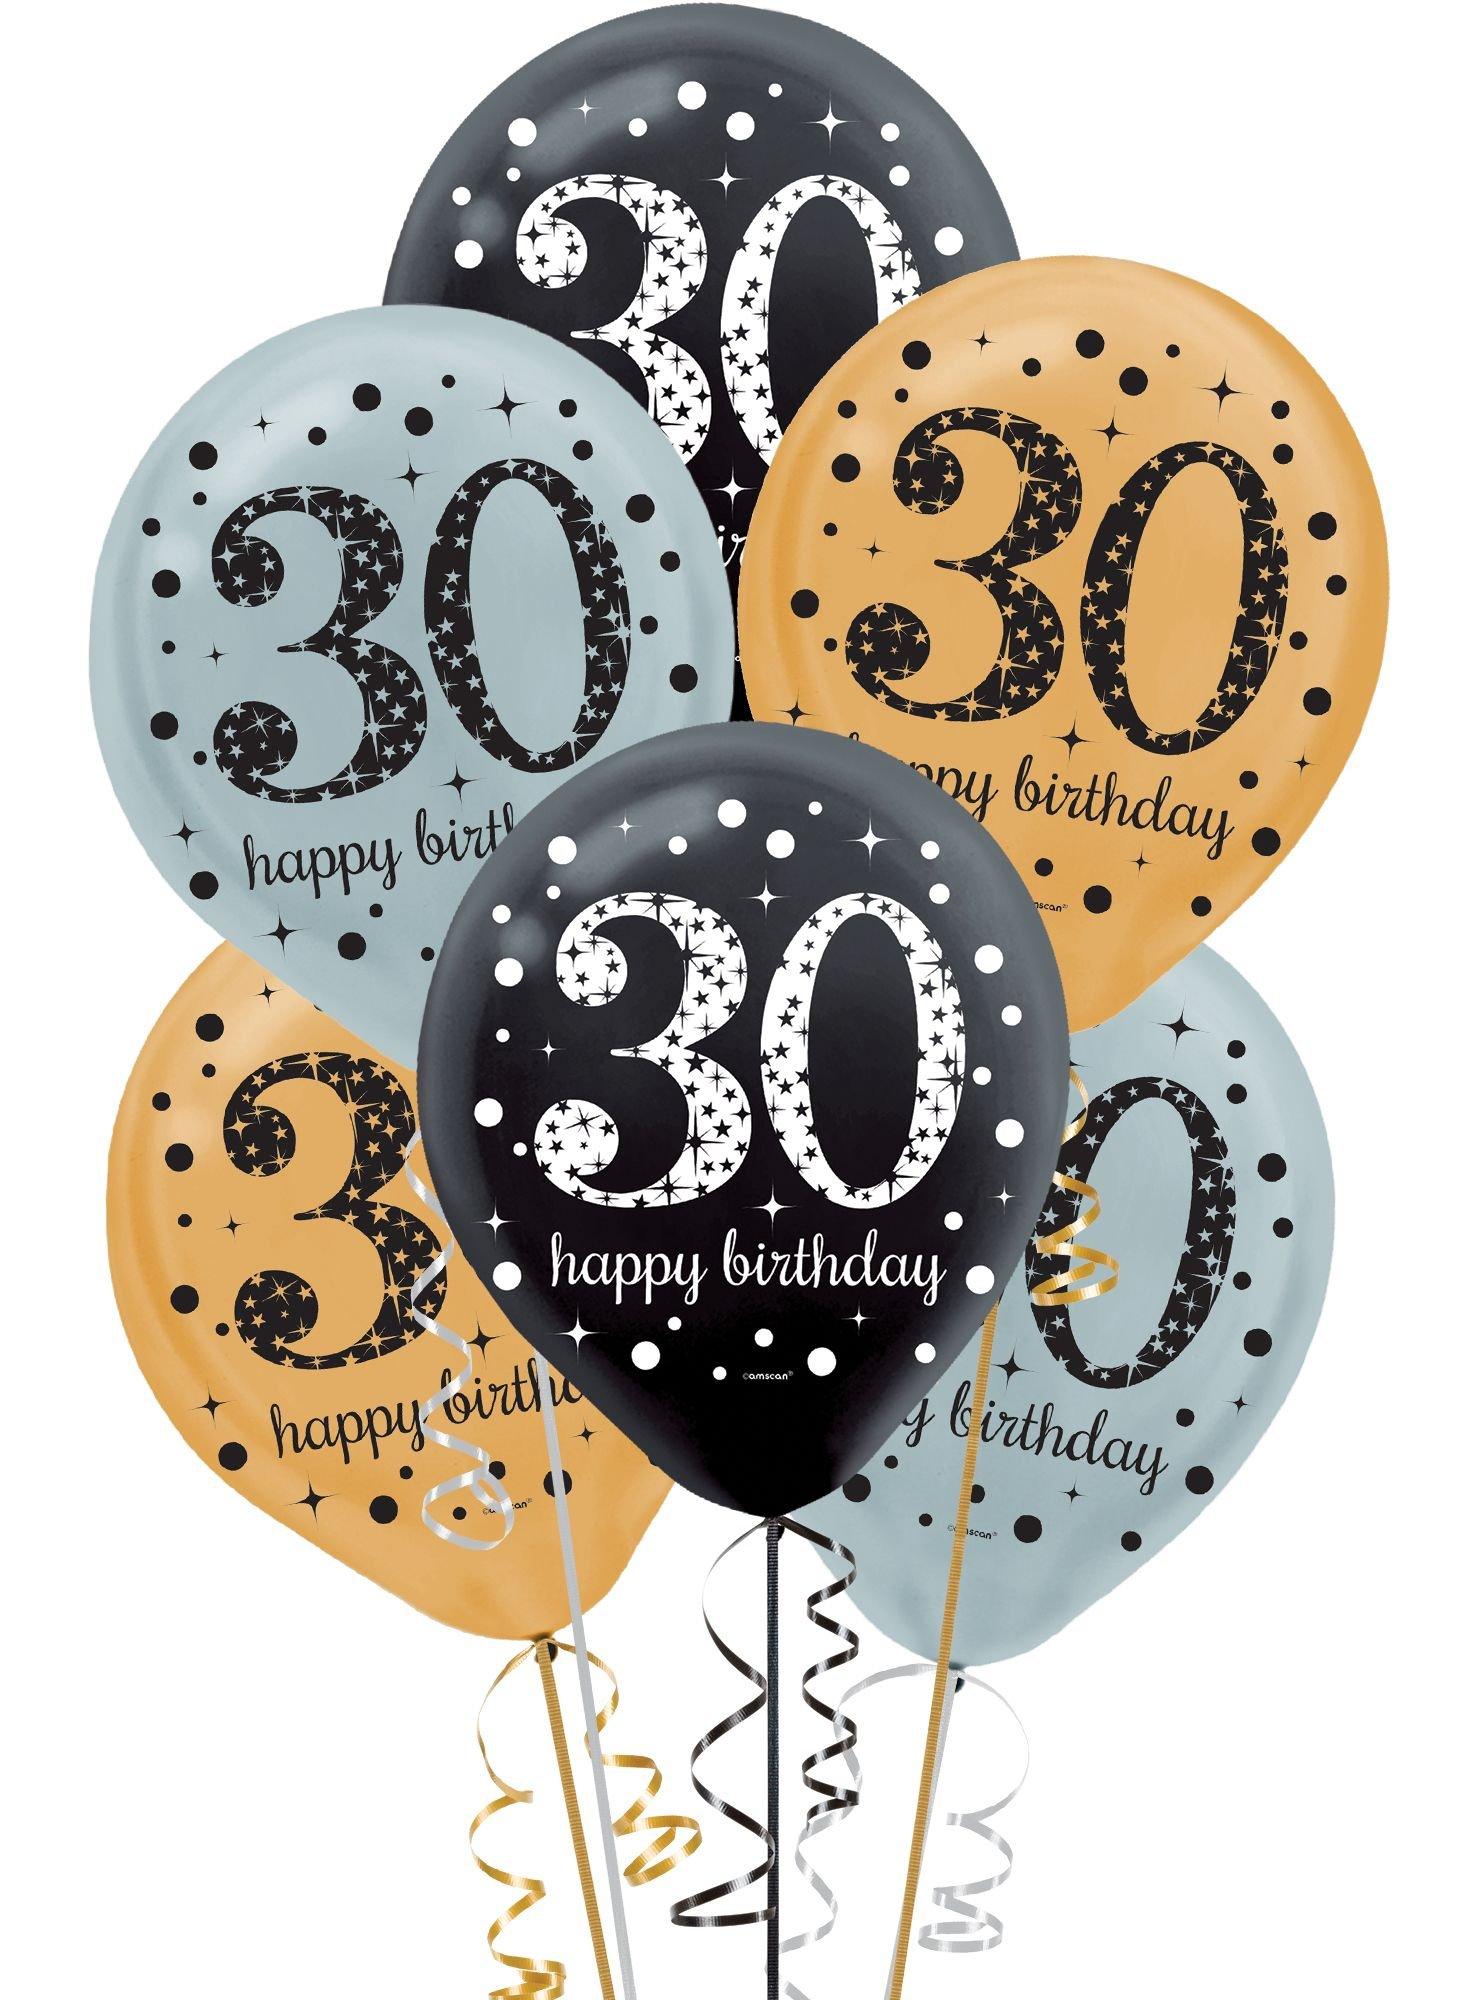 15ct, 30th Birthday Balloons - Sparkling Celebration